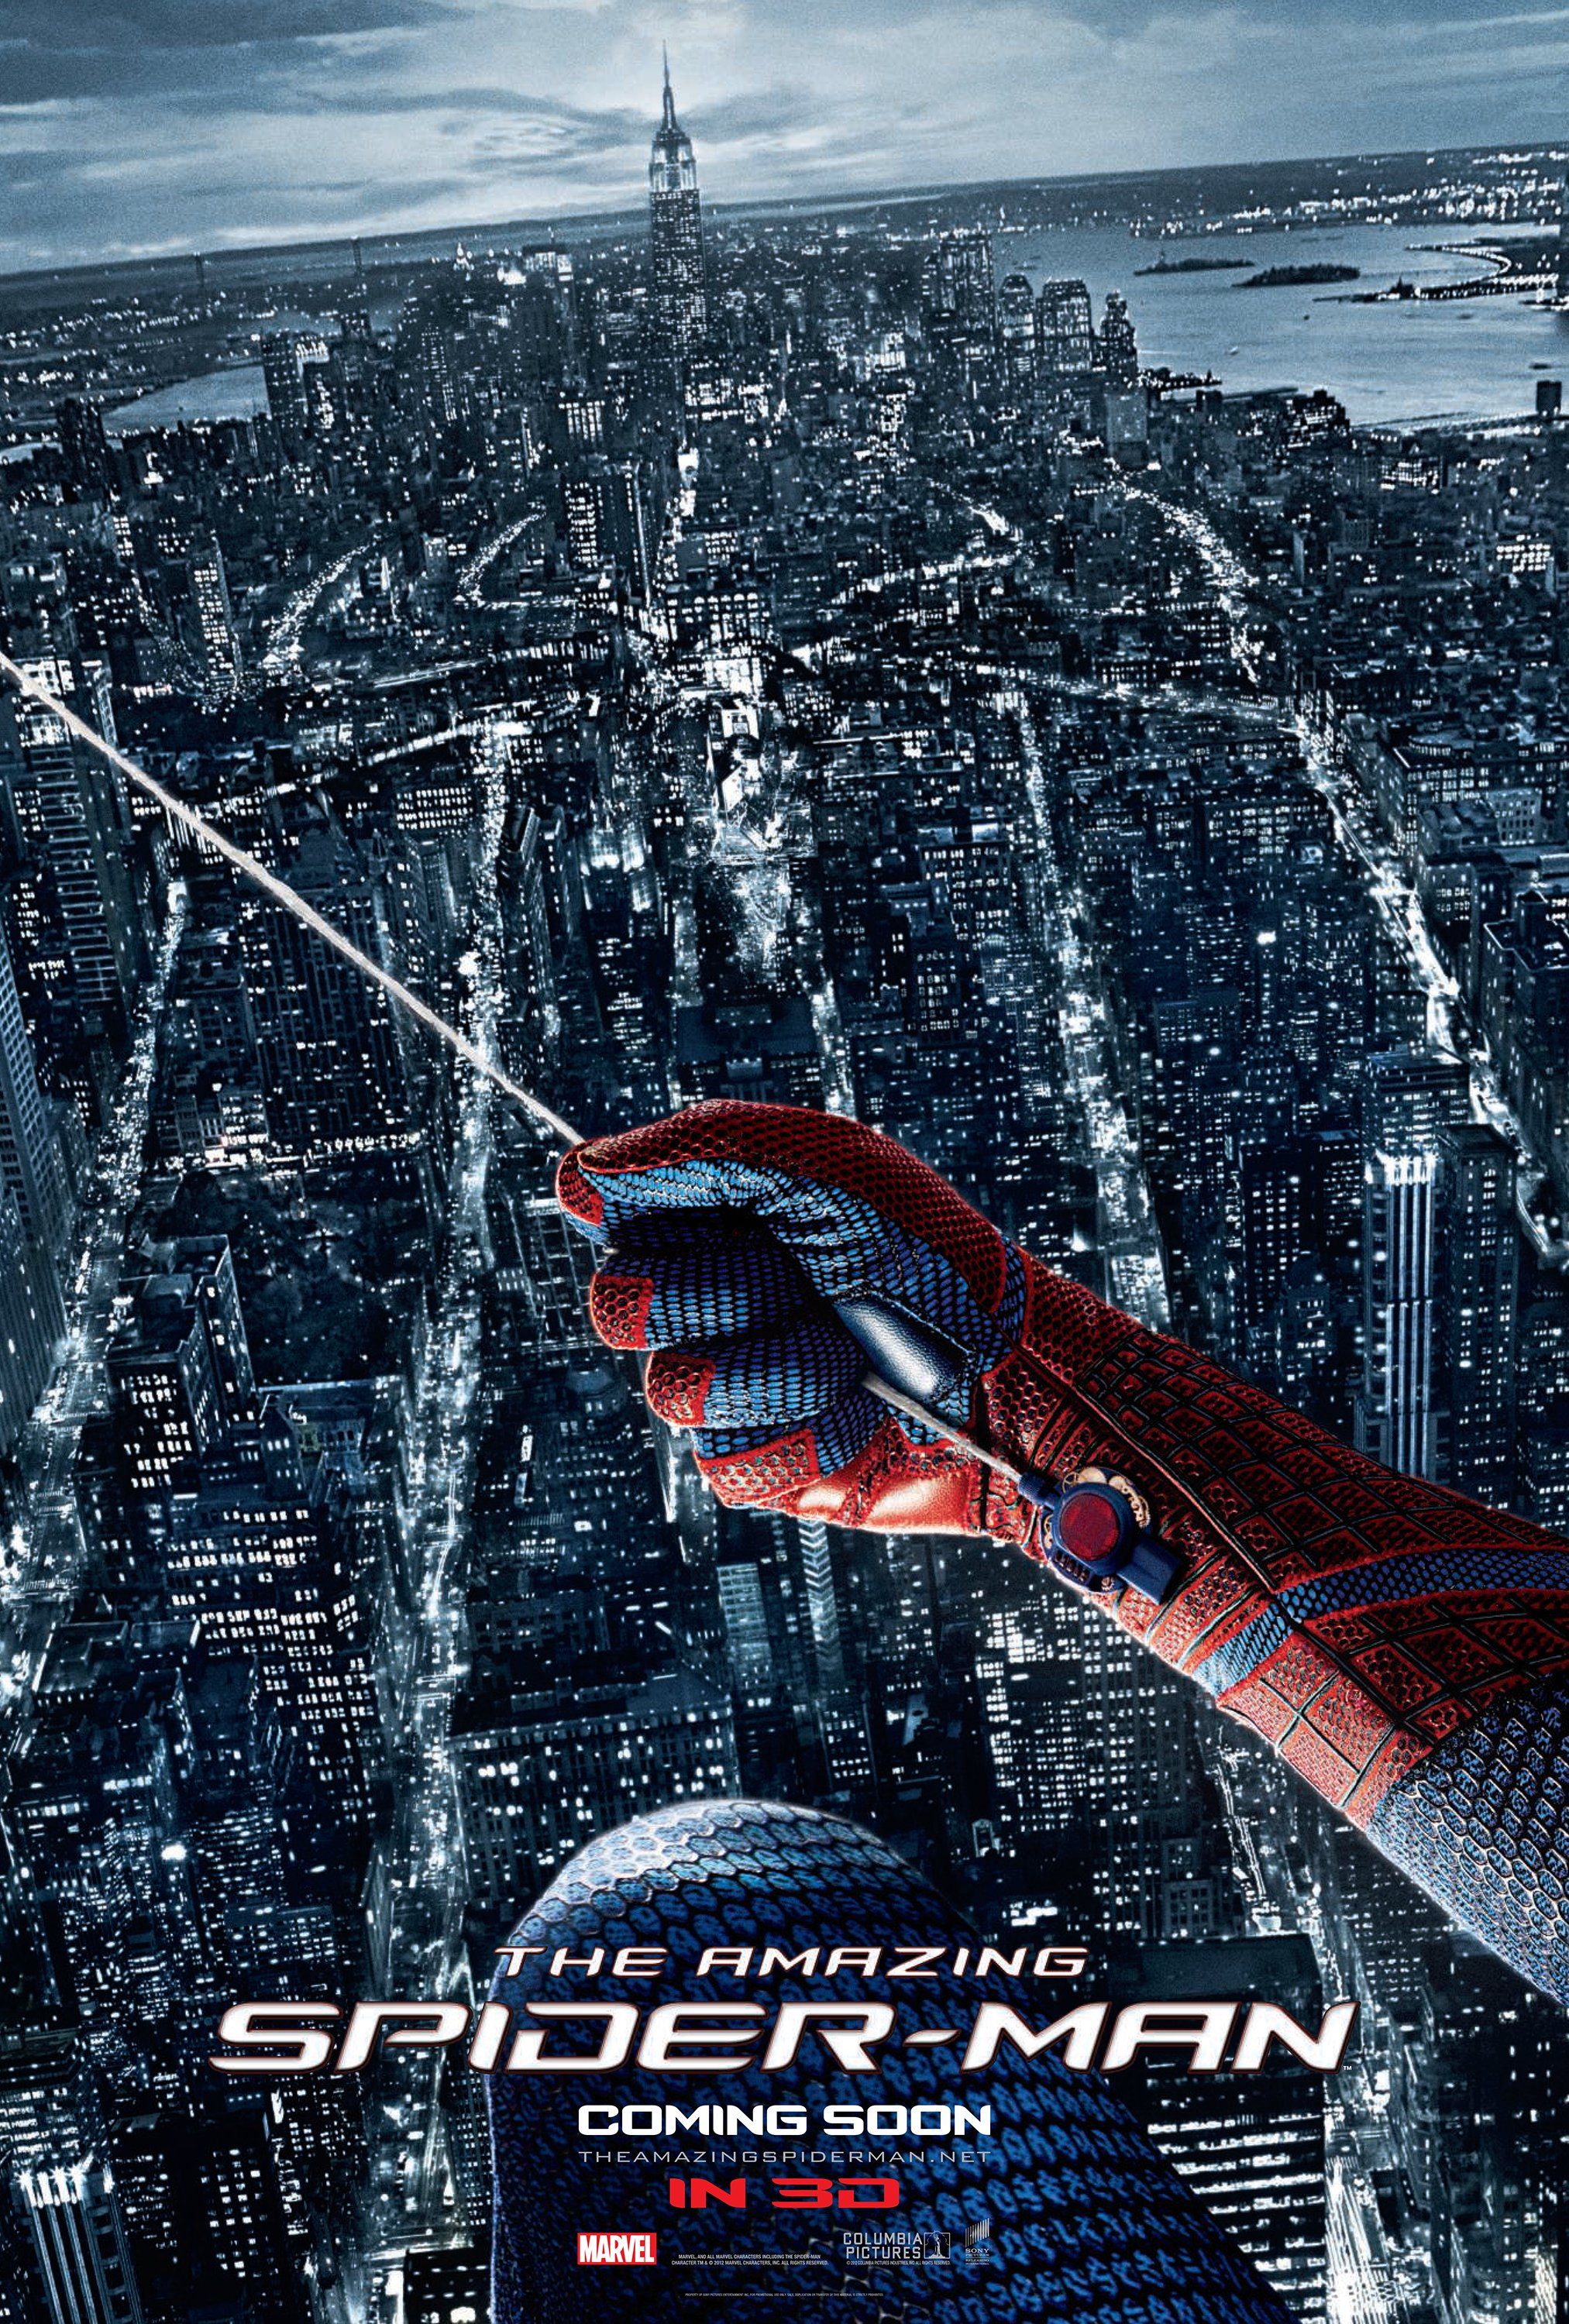 Spider-Man IMAX Poser #2